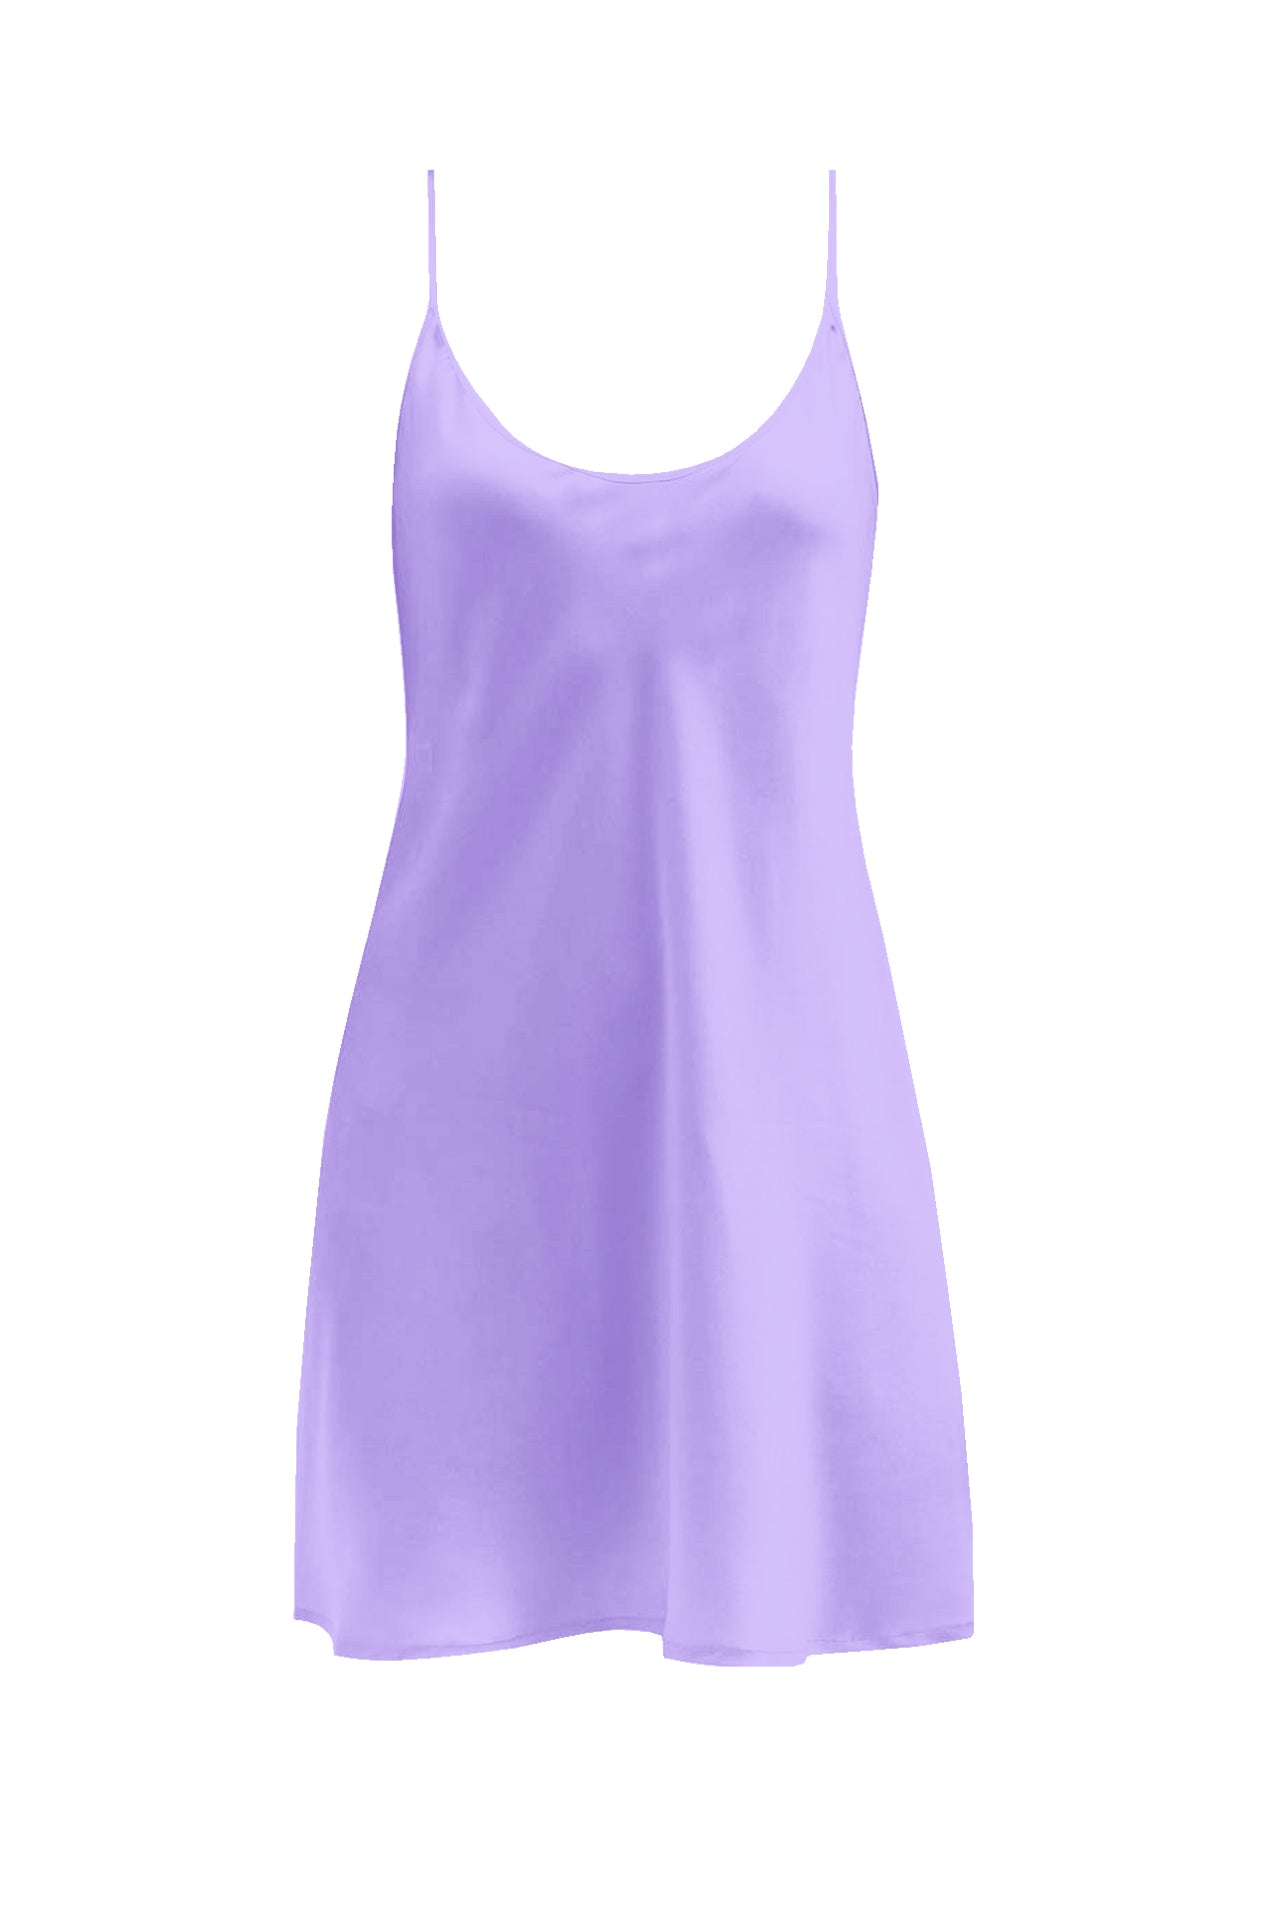 "short dress purple" "short dresses for women" "mini dresses for women" "Kyle X Shahida"